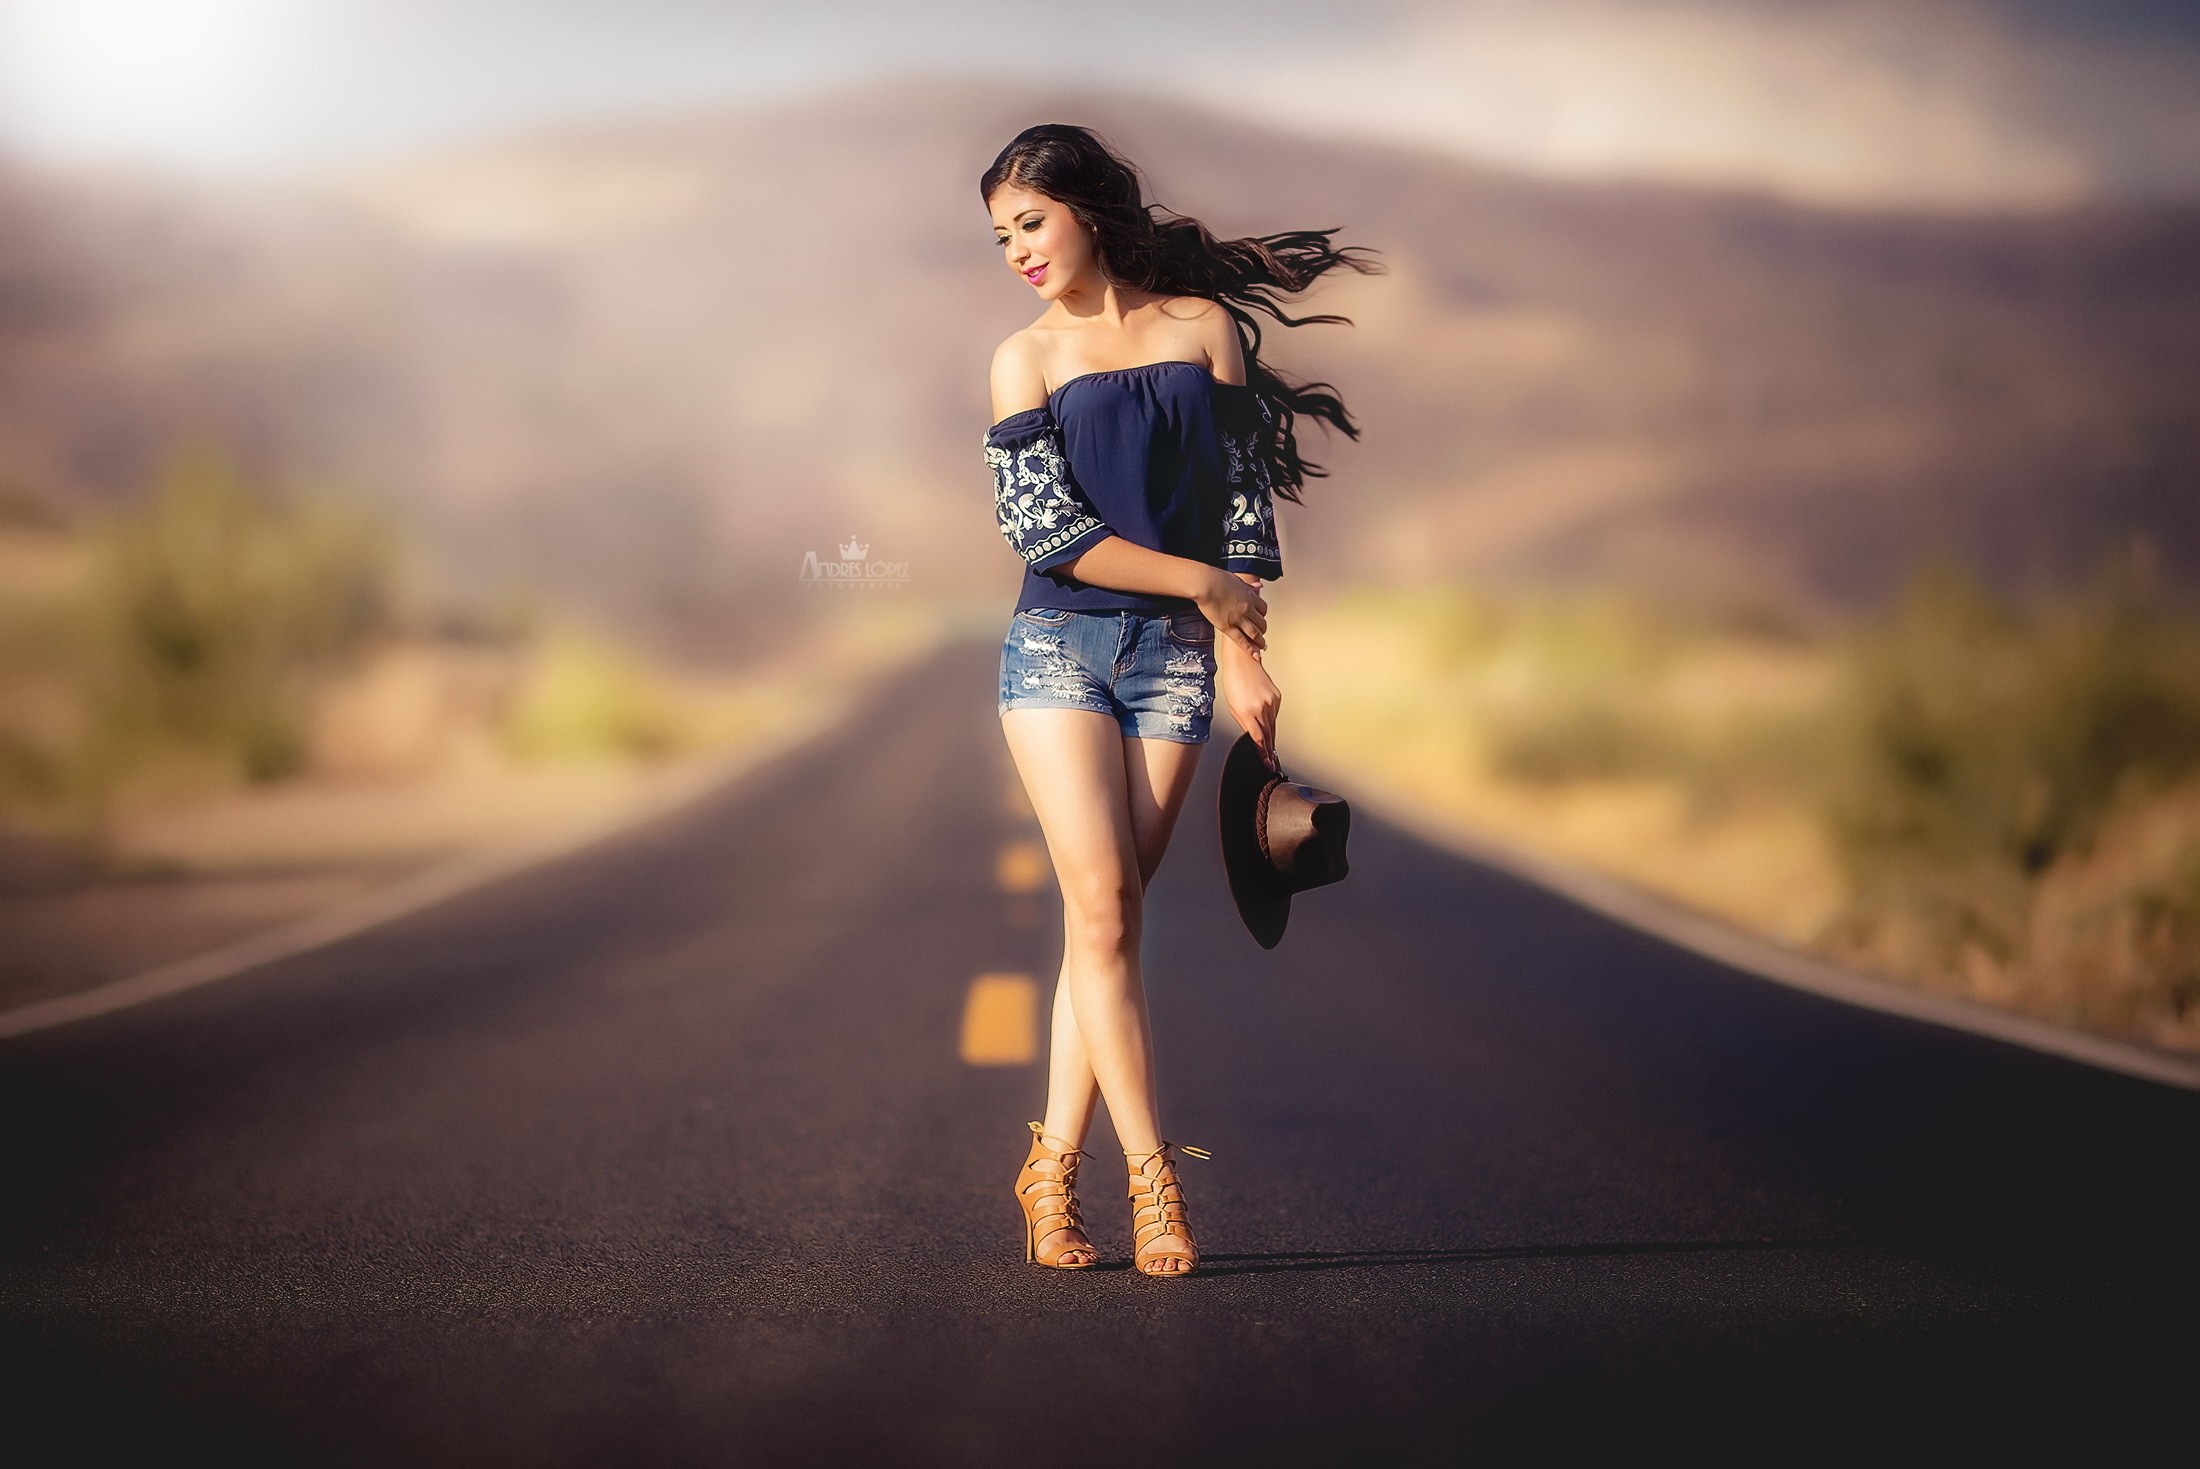 Road girls. Девушка на дороге. Красивая девушка на дороге. Девушка идет. Фотосессия на дороге.